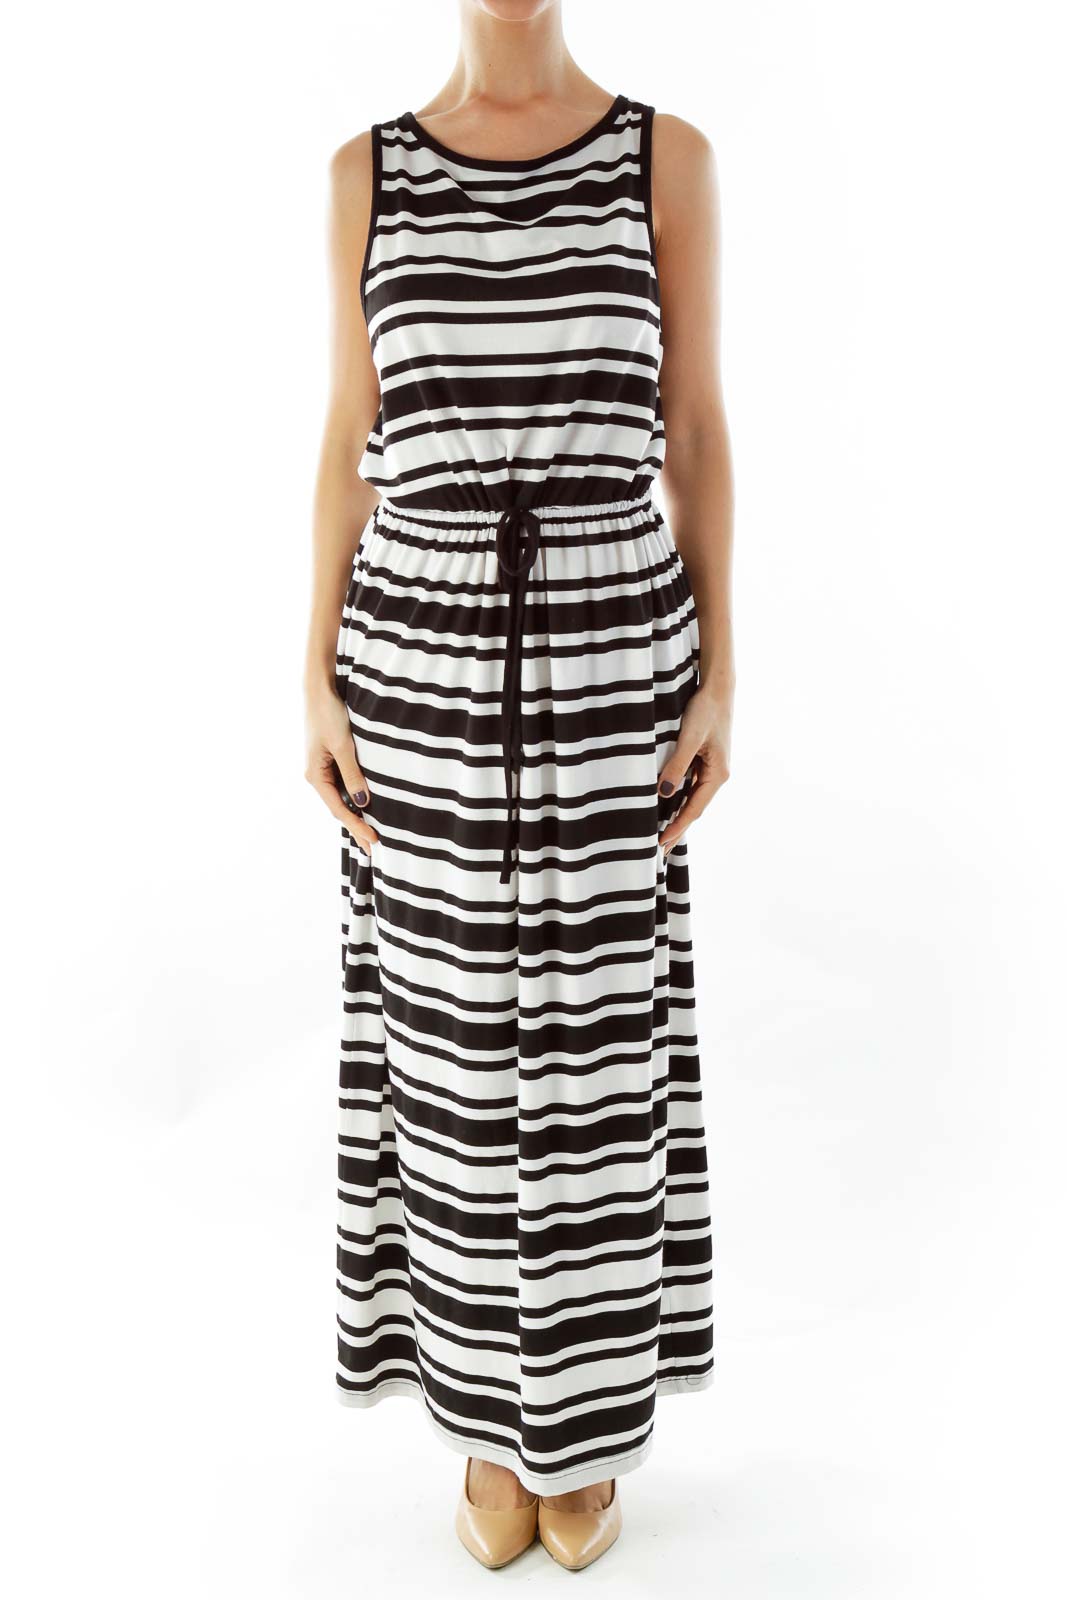 Black White Striped Maxi Dress Front